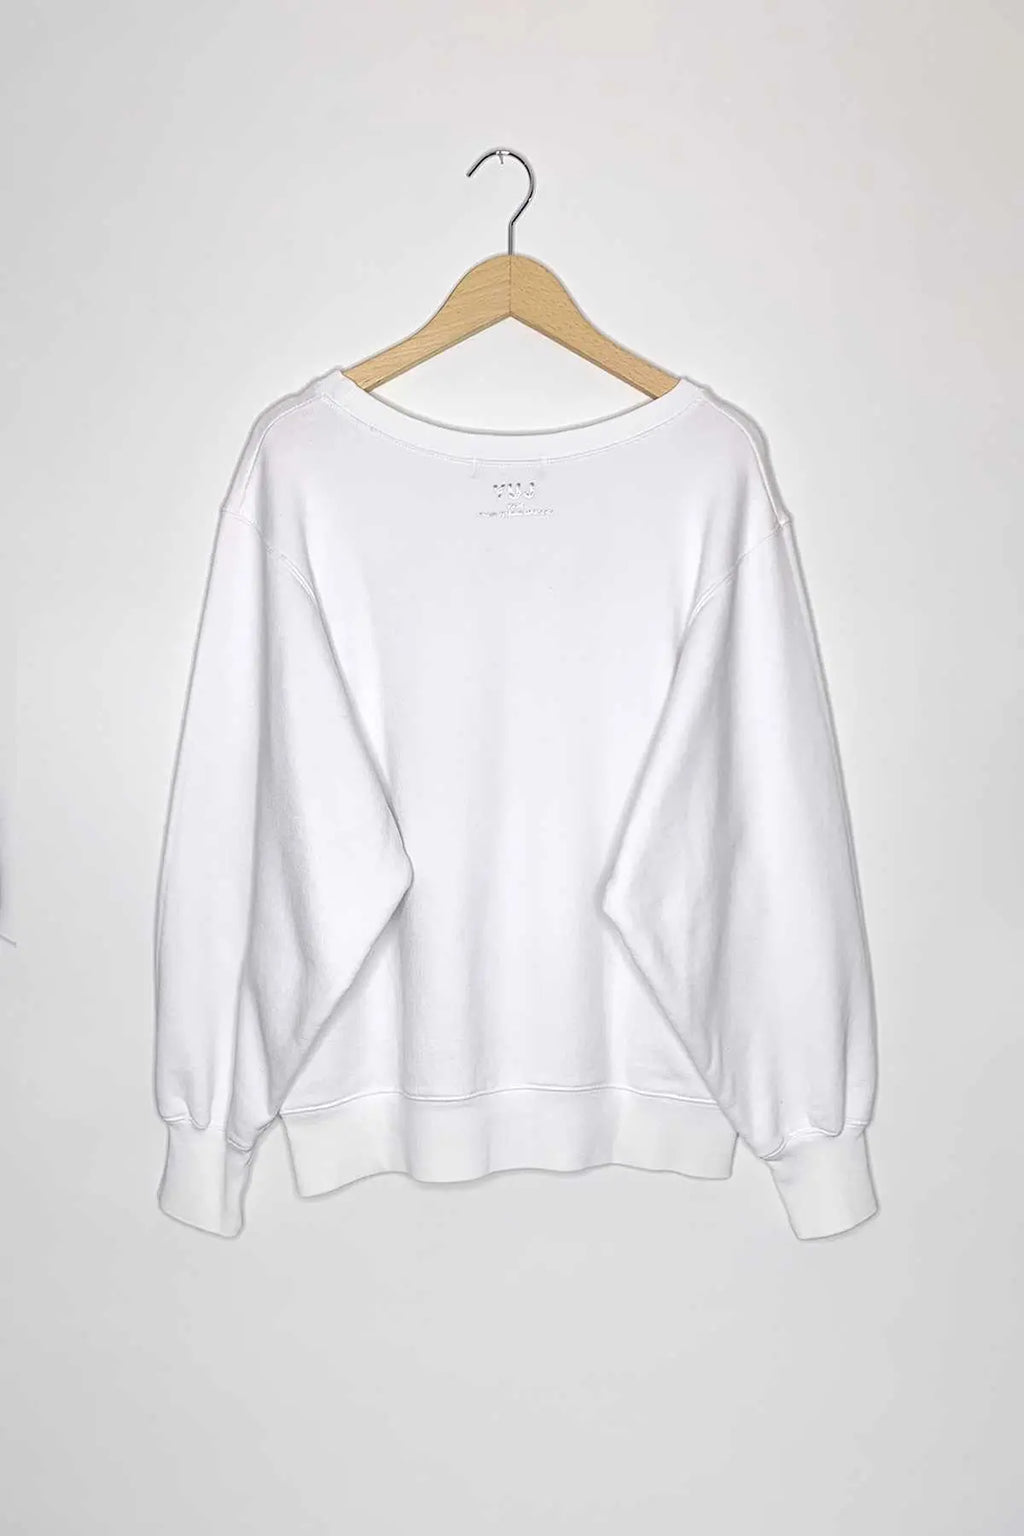 #475 - White GOOD VIBES DEALER sweatshirt // Size S YUJ - House of Mindfulness